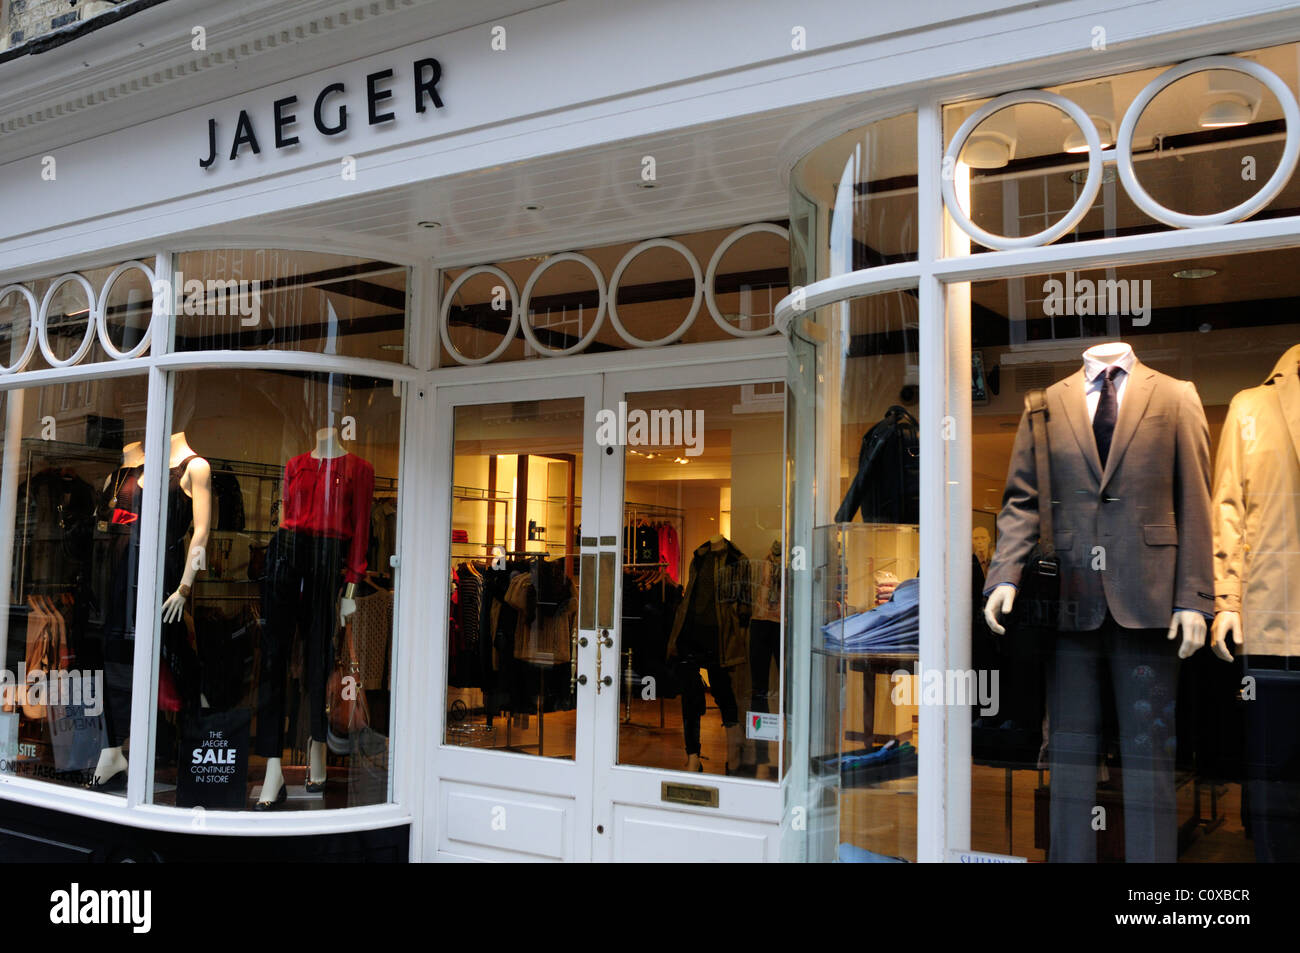 Jaeger Clothes Shop Window display, Trinity Street, Cambridge, England, UK Banque D'Images